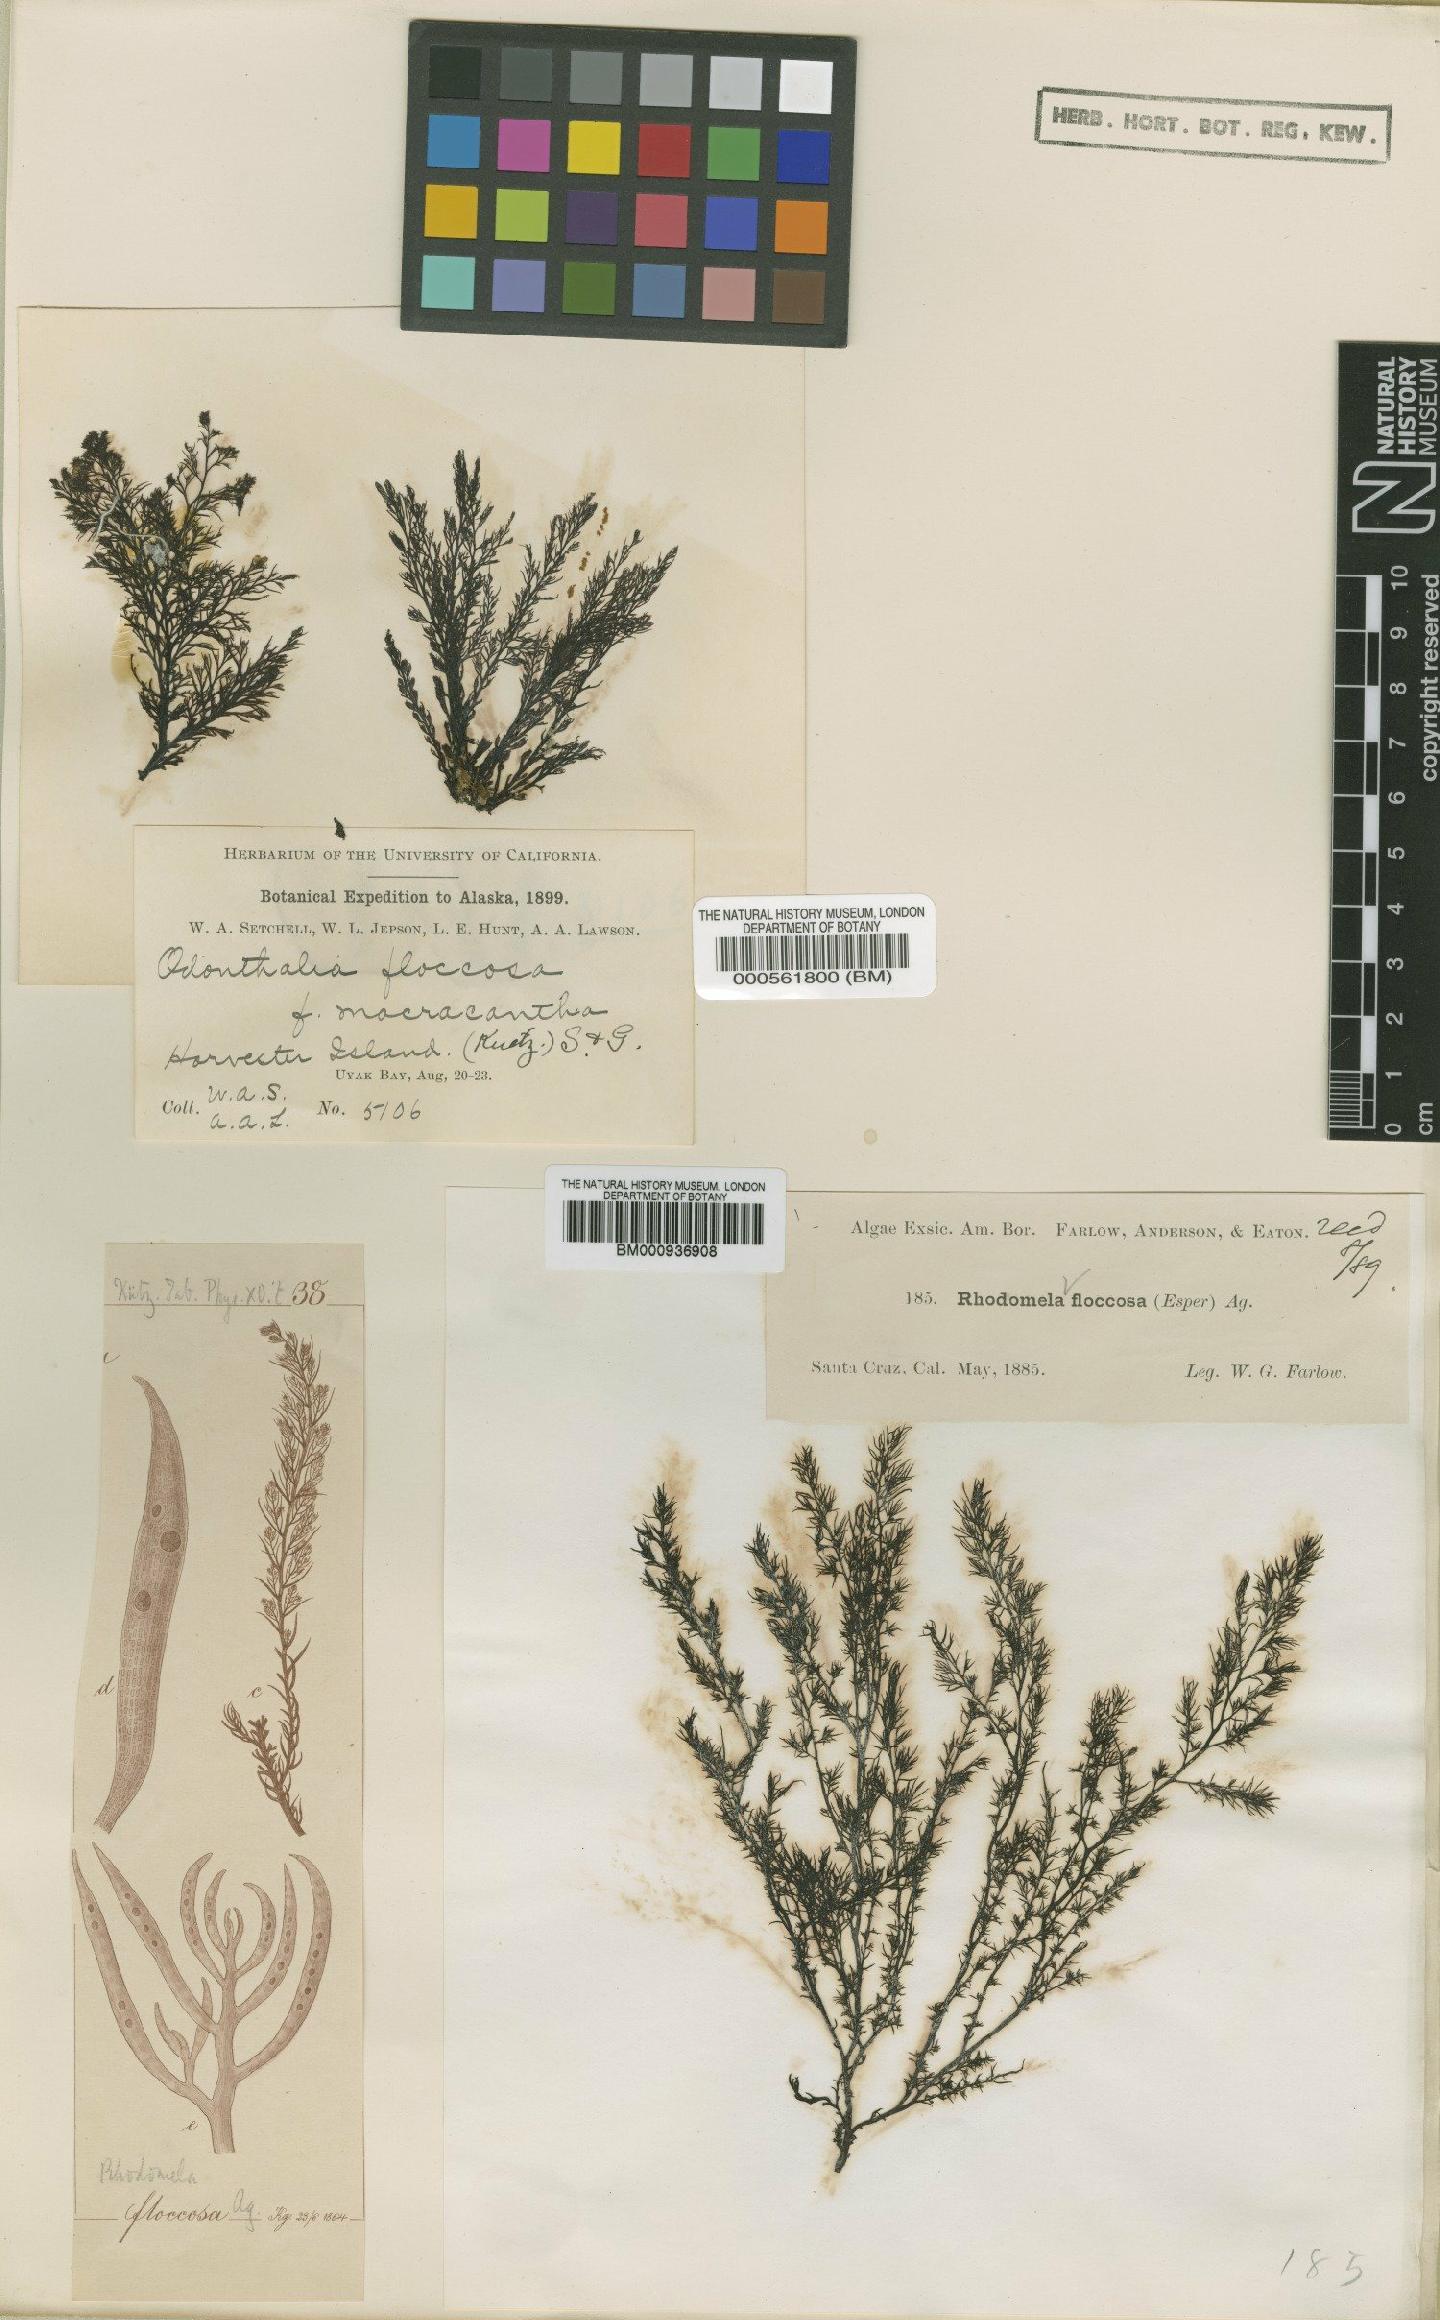 To NHMUK collection (Odonthalia floccosa (Esper) Falkenberg; Syntype; NHMUK:ecatalogue:4784363)